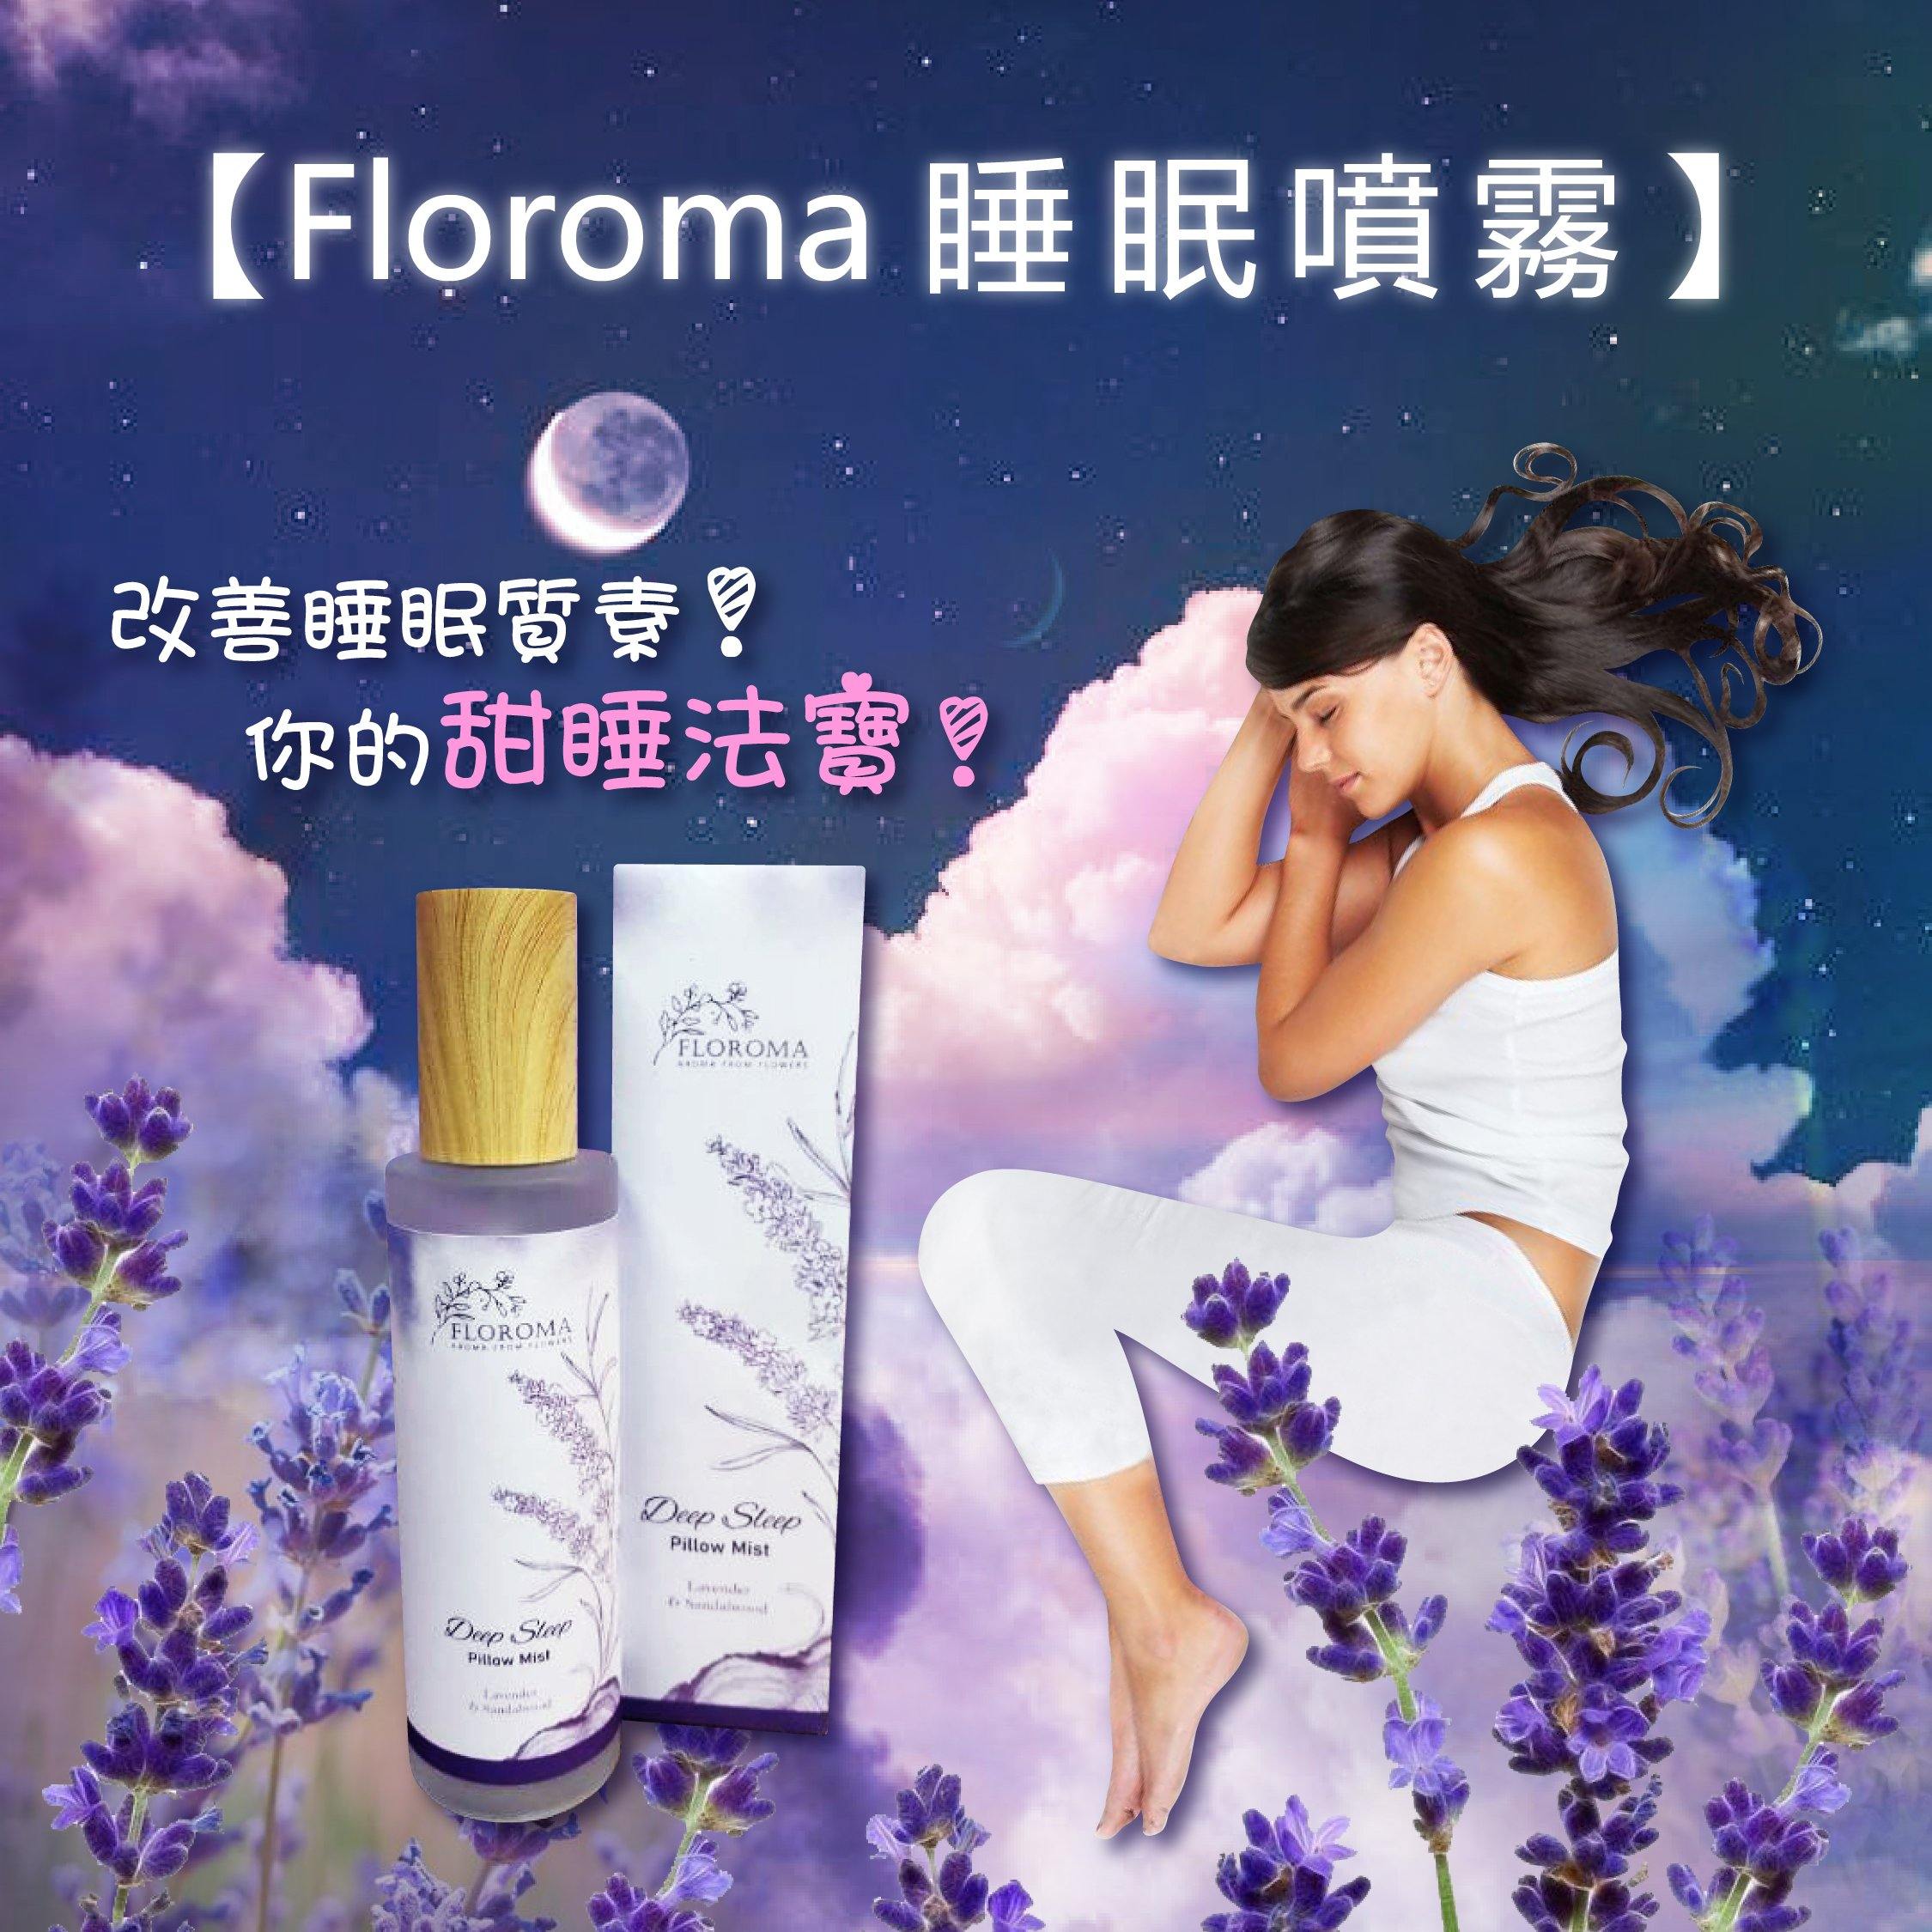 新!! Floroma【睡眠噴霧】 Deep Sleep Pillow Mist - Floroma 花の滴